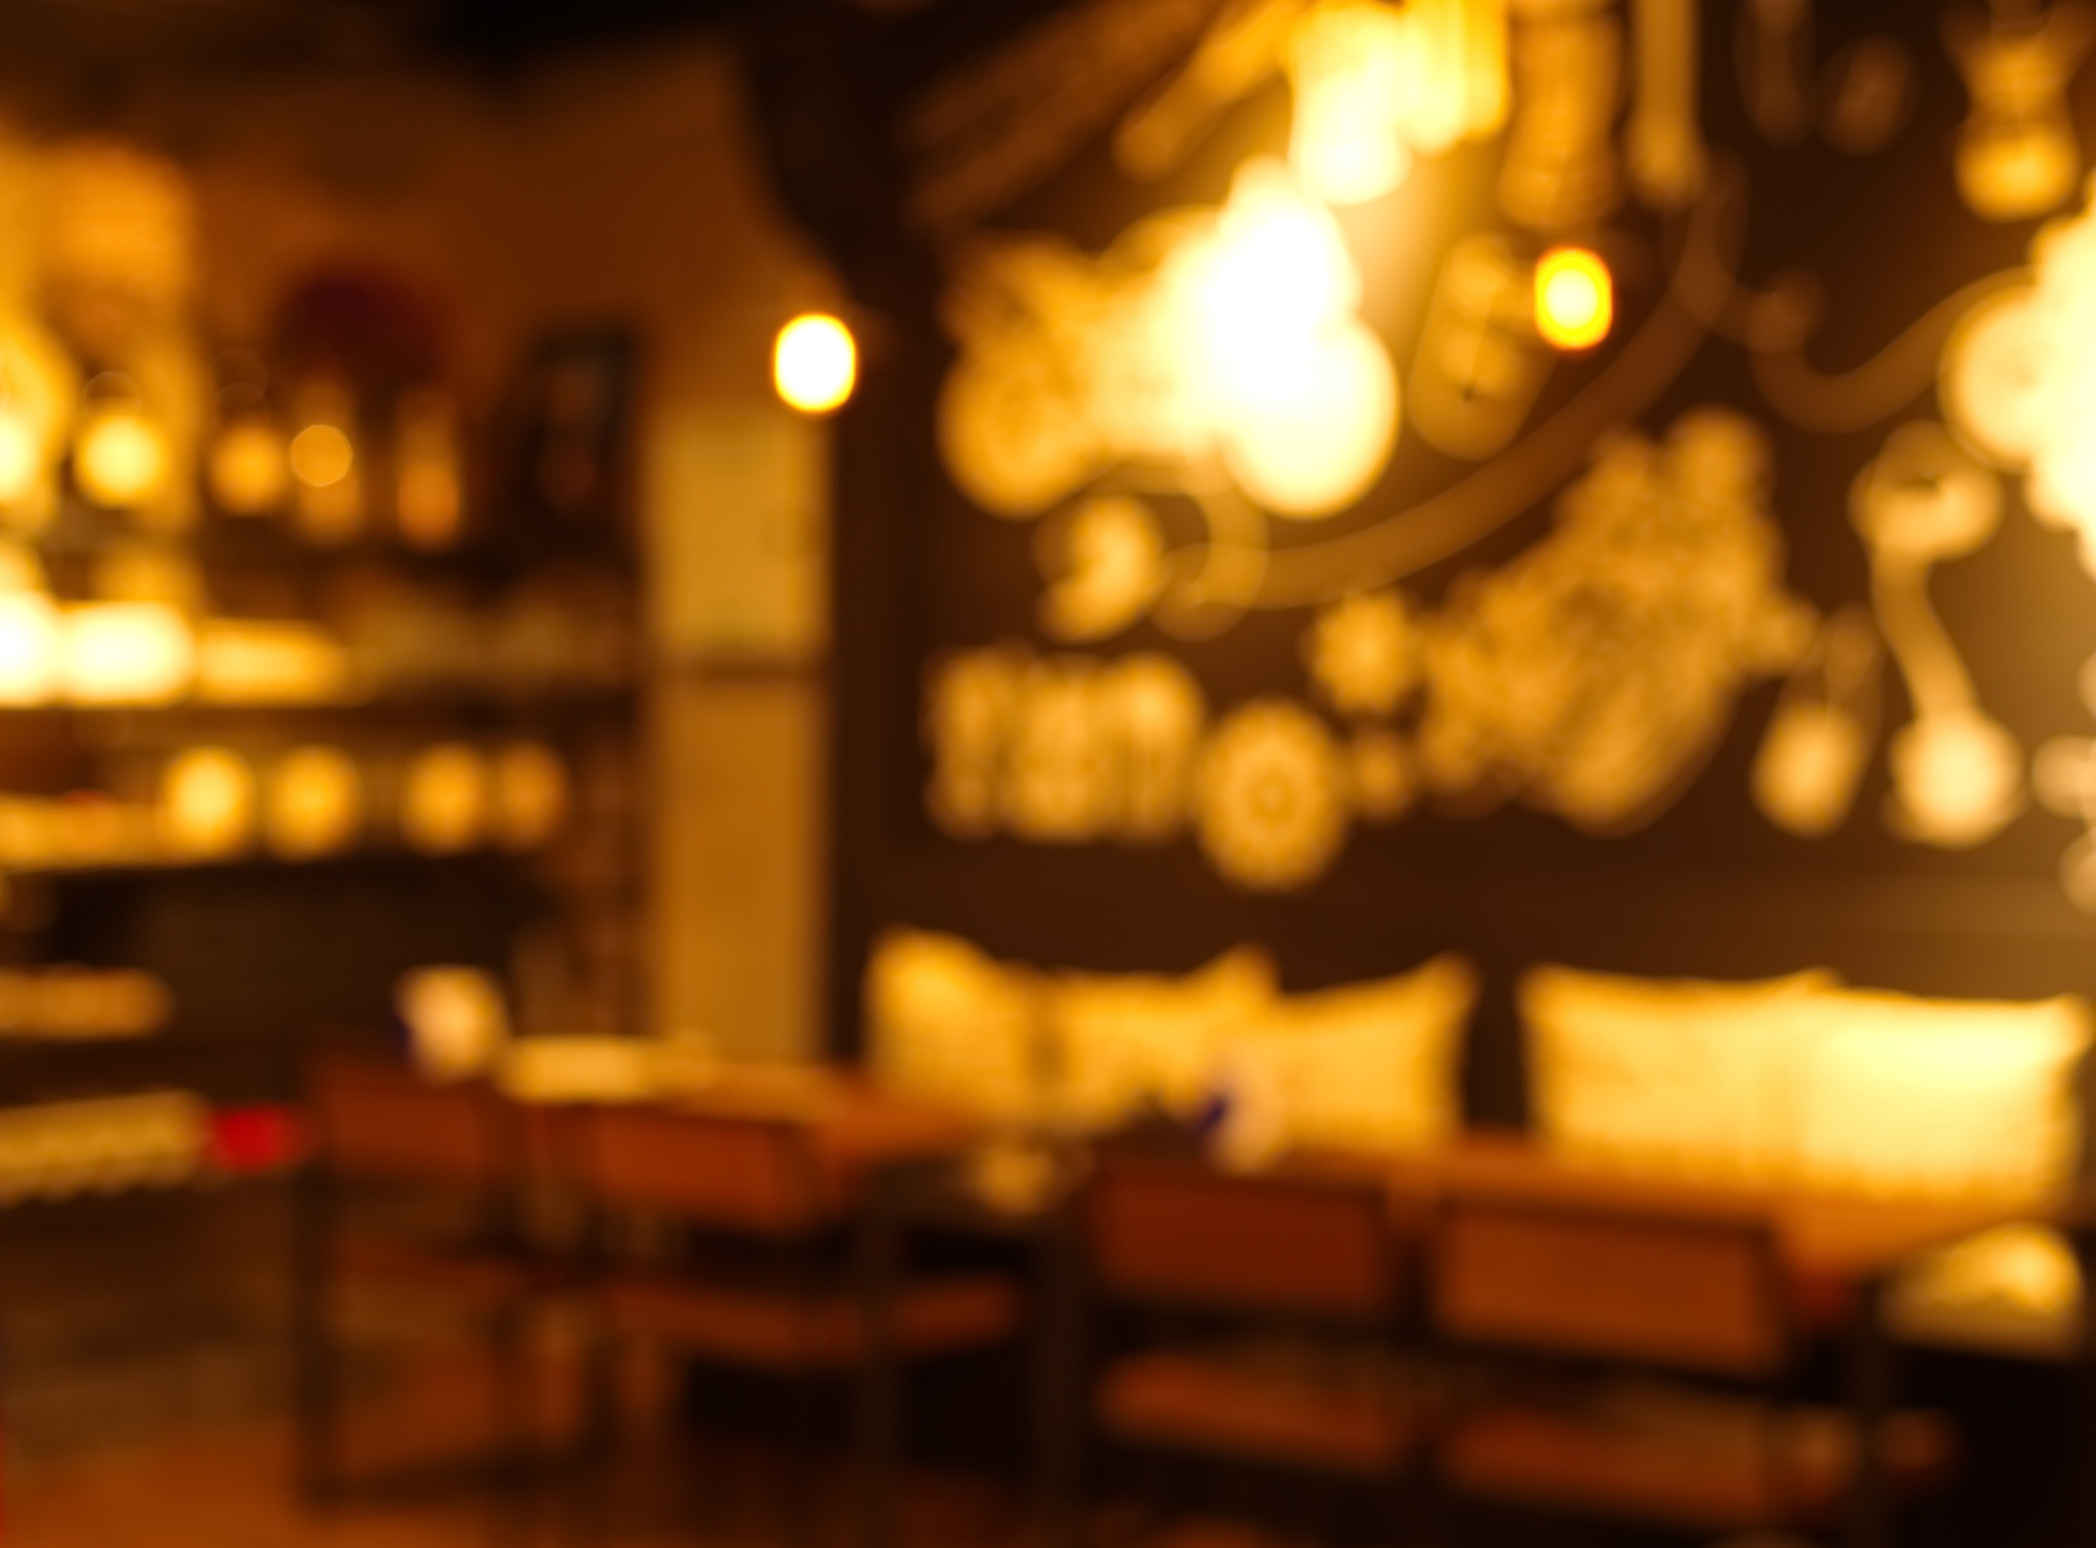 blur pub and resturant at night